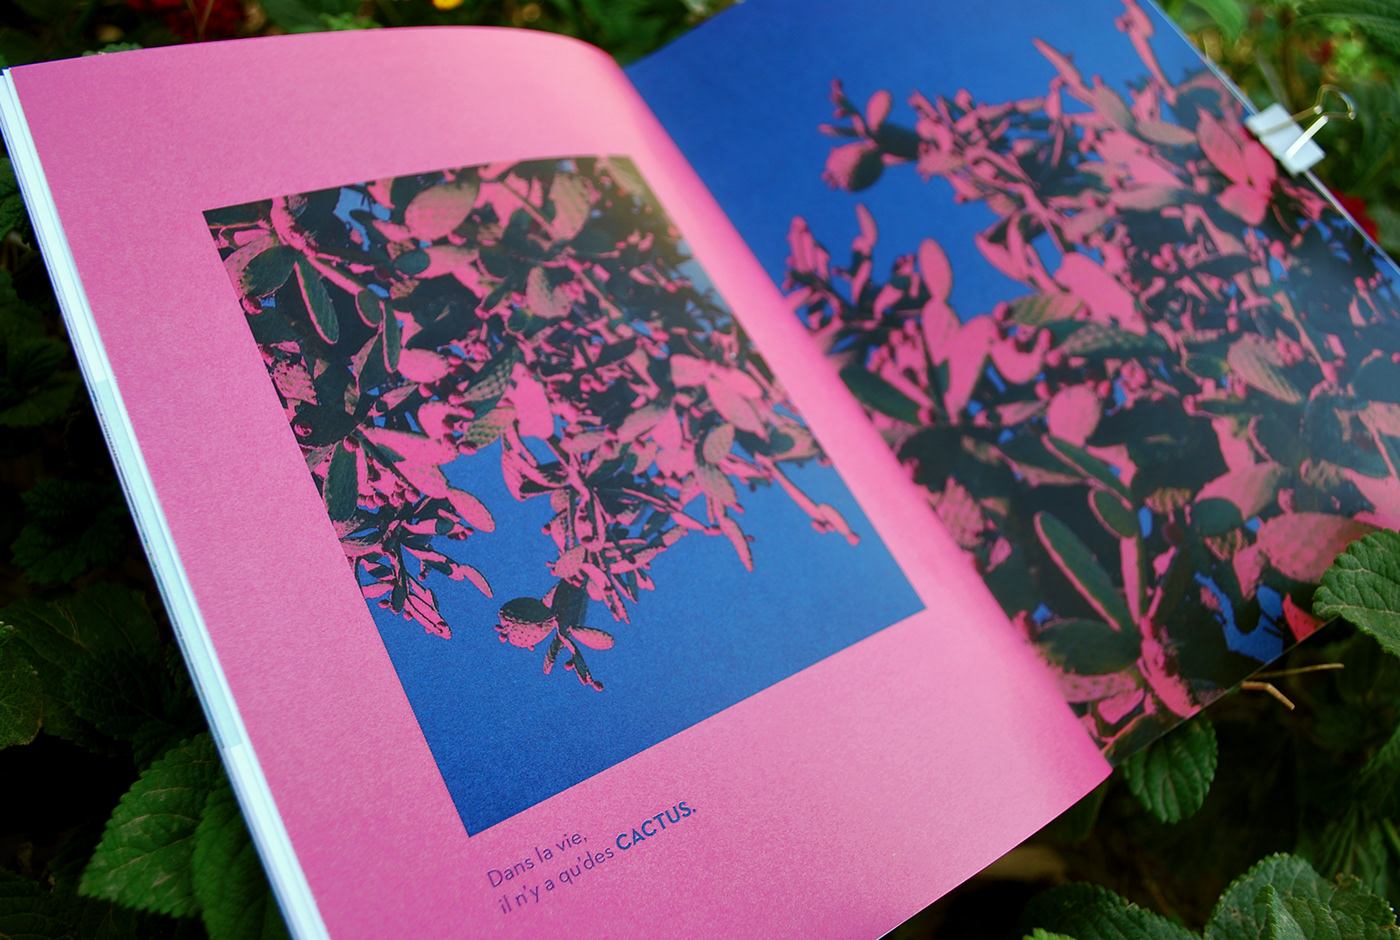 malta edition editorial book fanzine graphic design  art direction  Photography  design